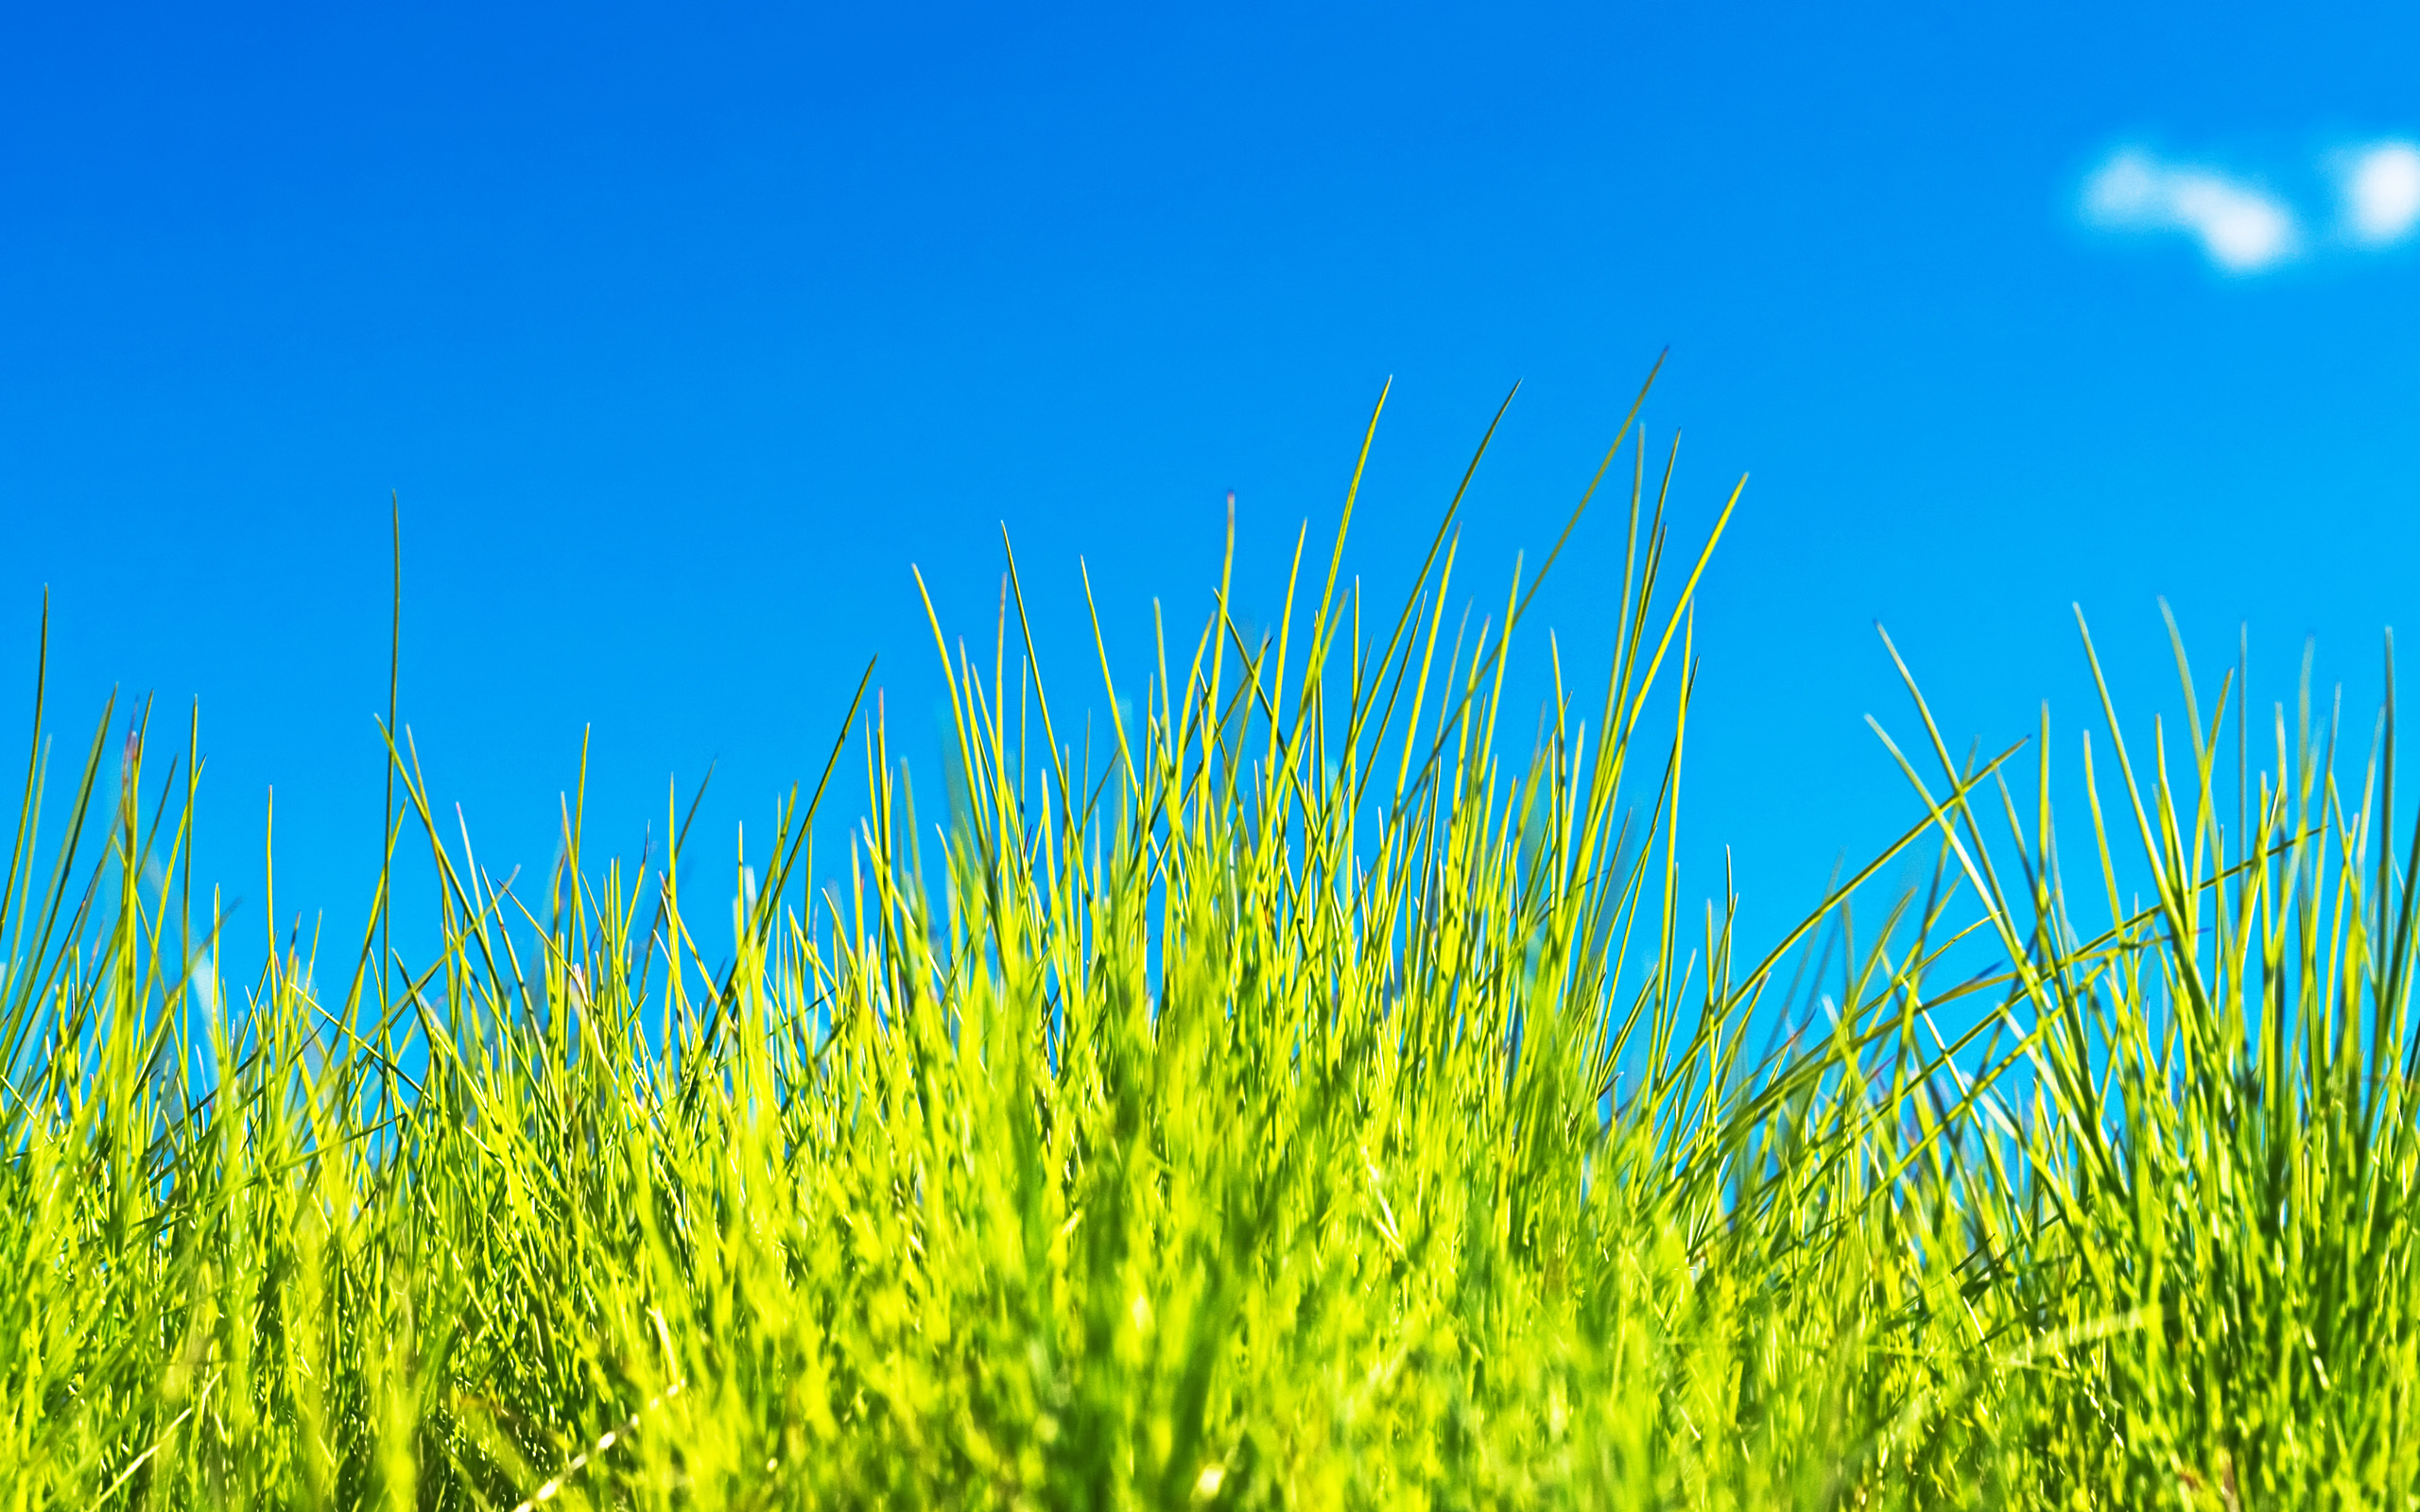  Grass  HD Wallpaper  Background Image 2560x1600 ID 